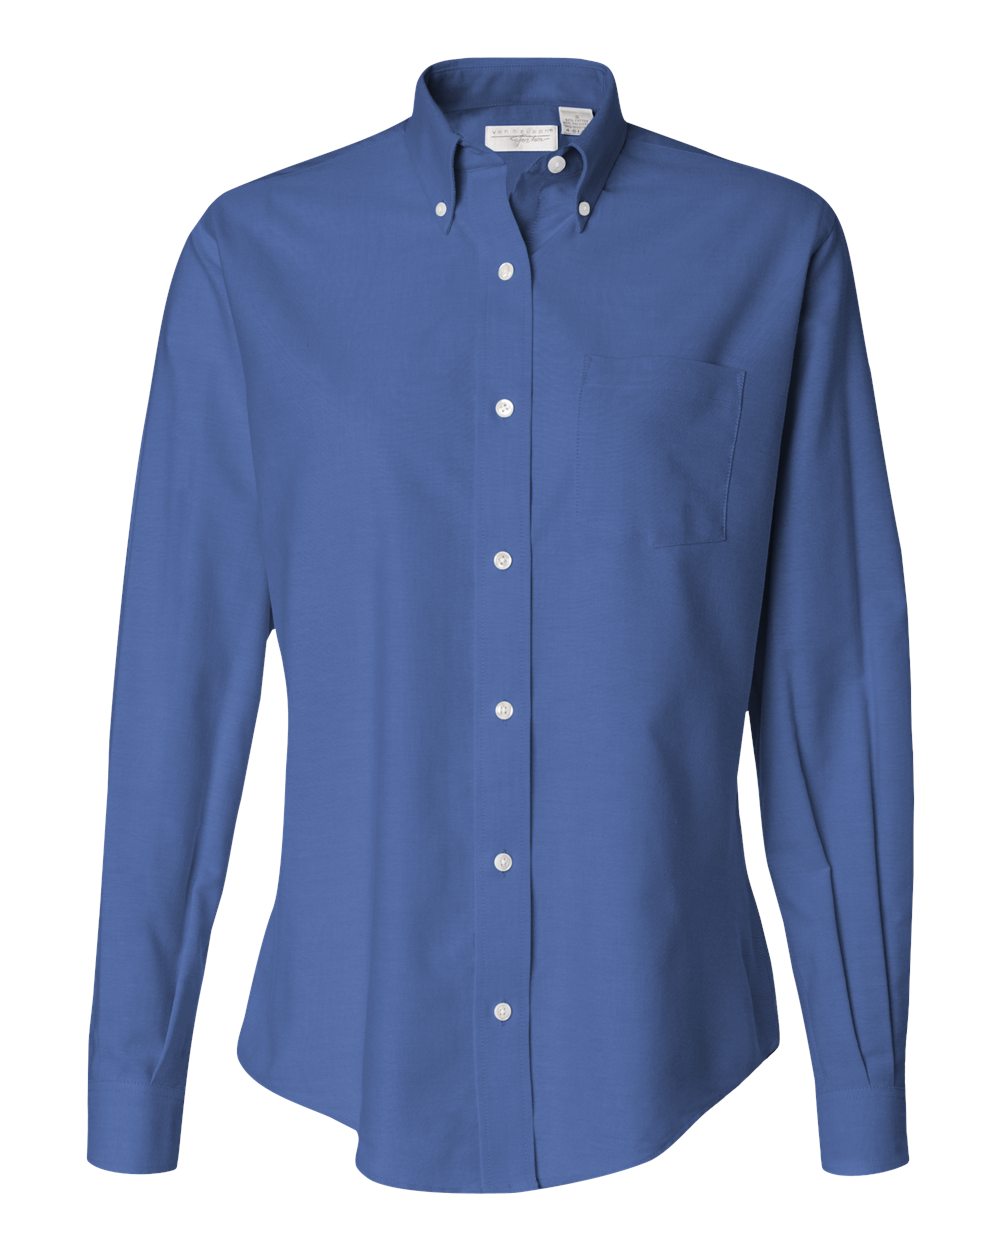 Oxford Shirt - English Blue